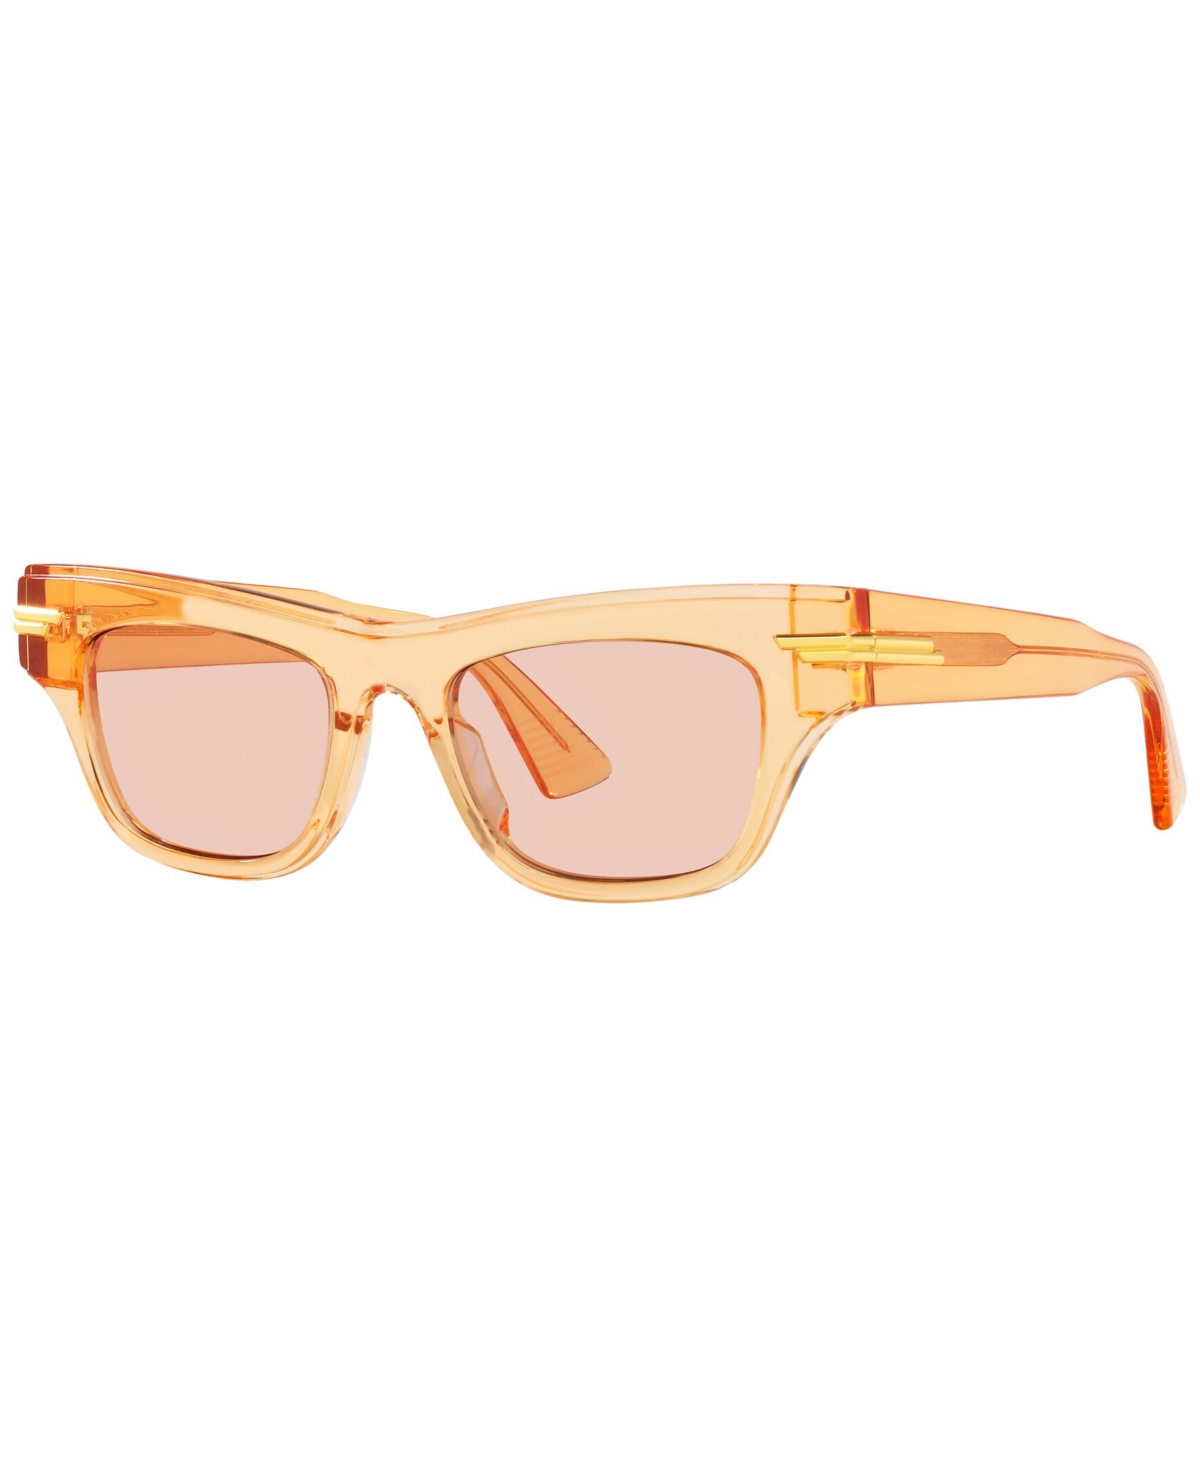 Women's Sunglasses, BV1122S - Orange